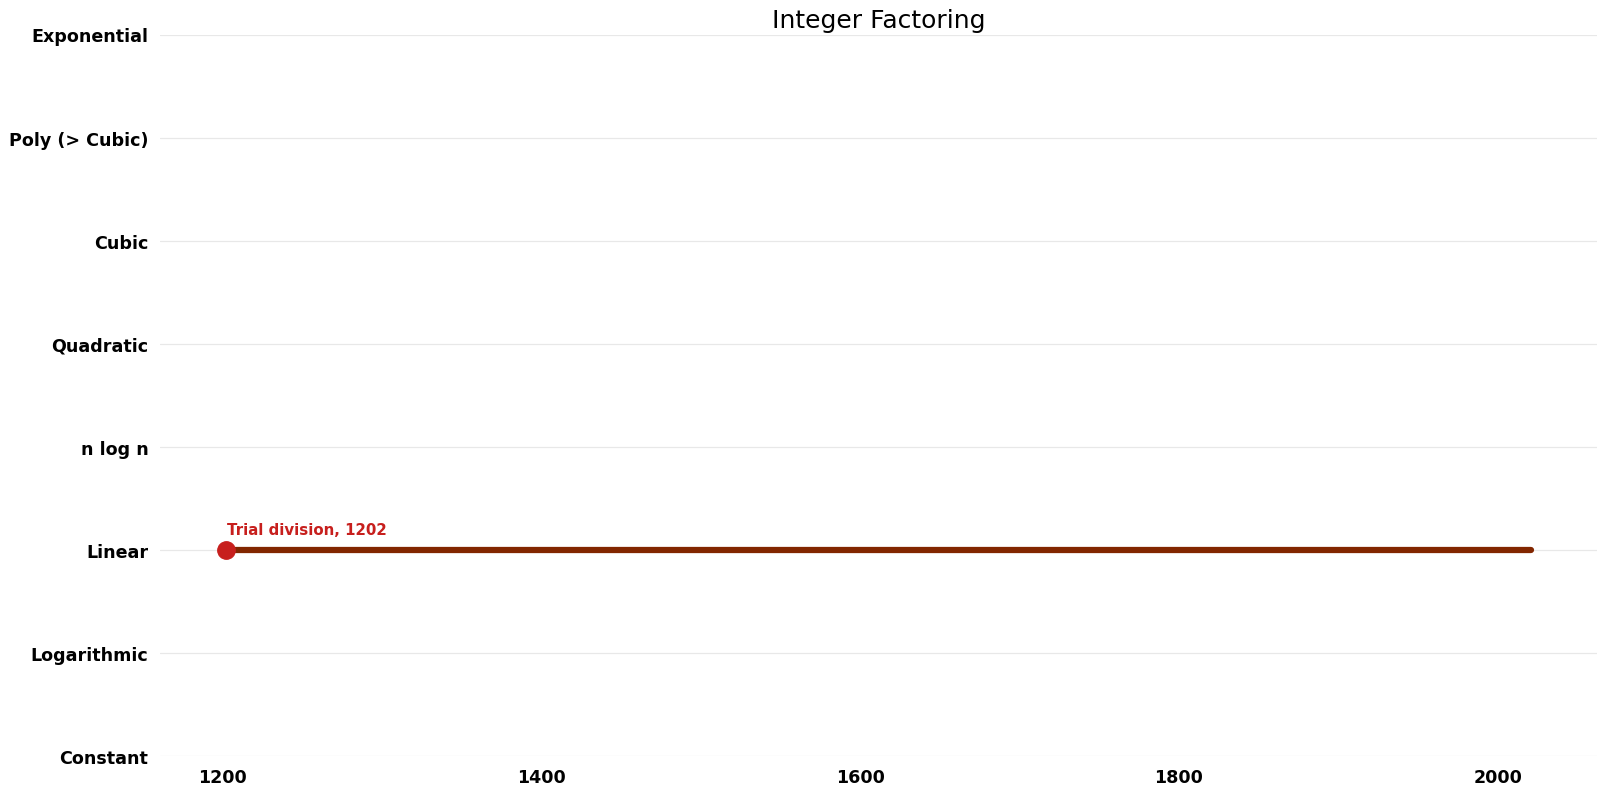 File:Integer Factoring - Space.png